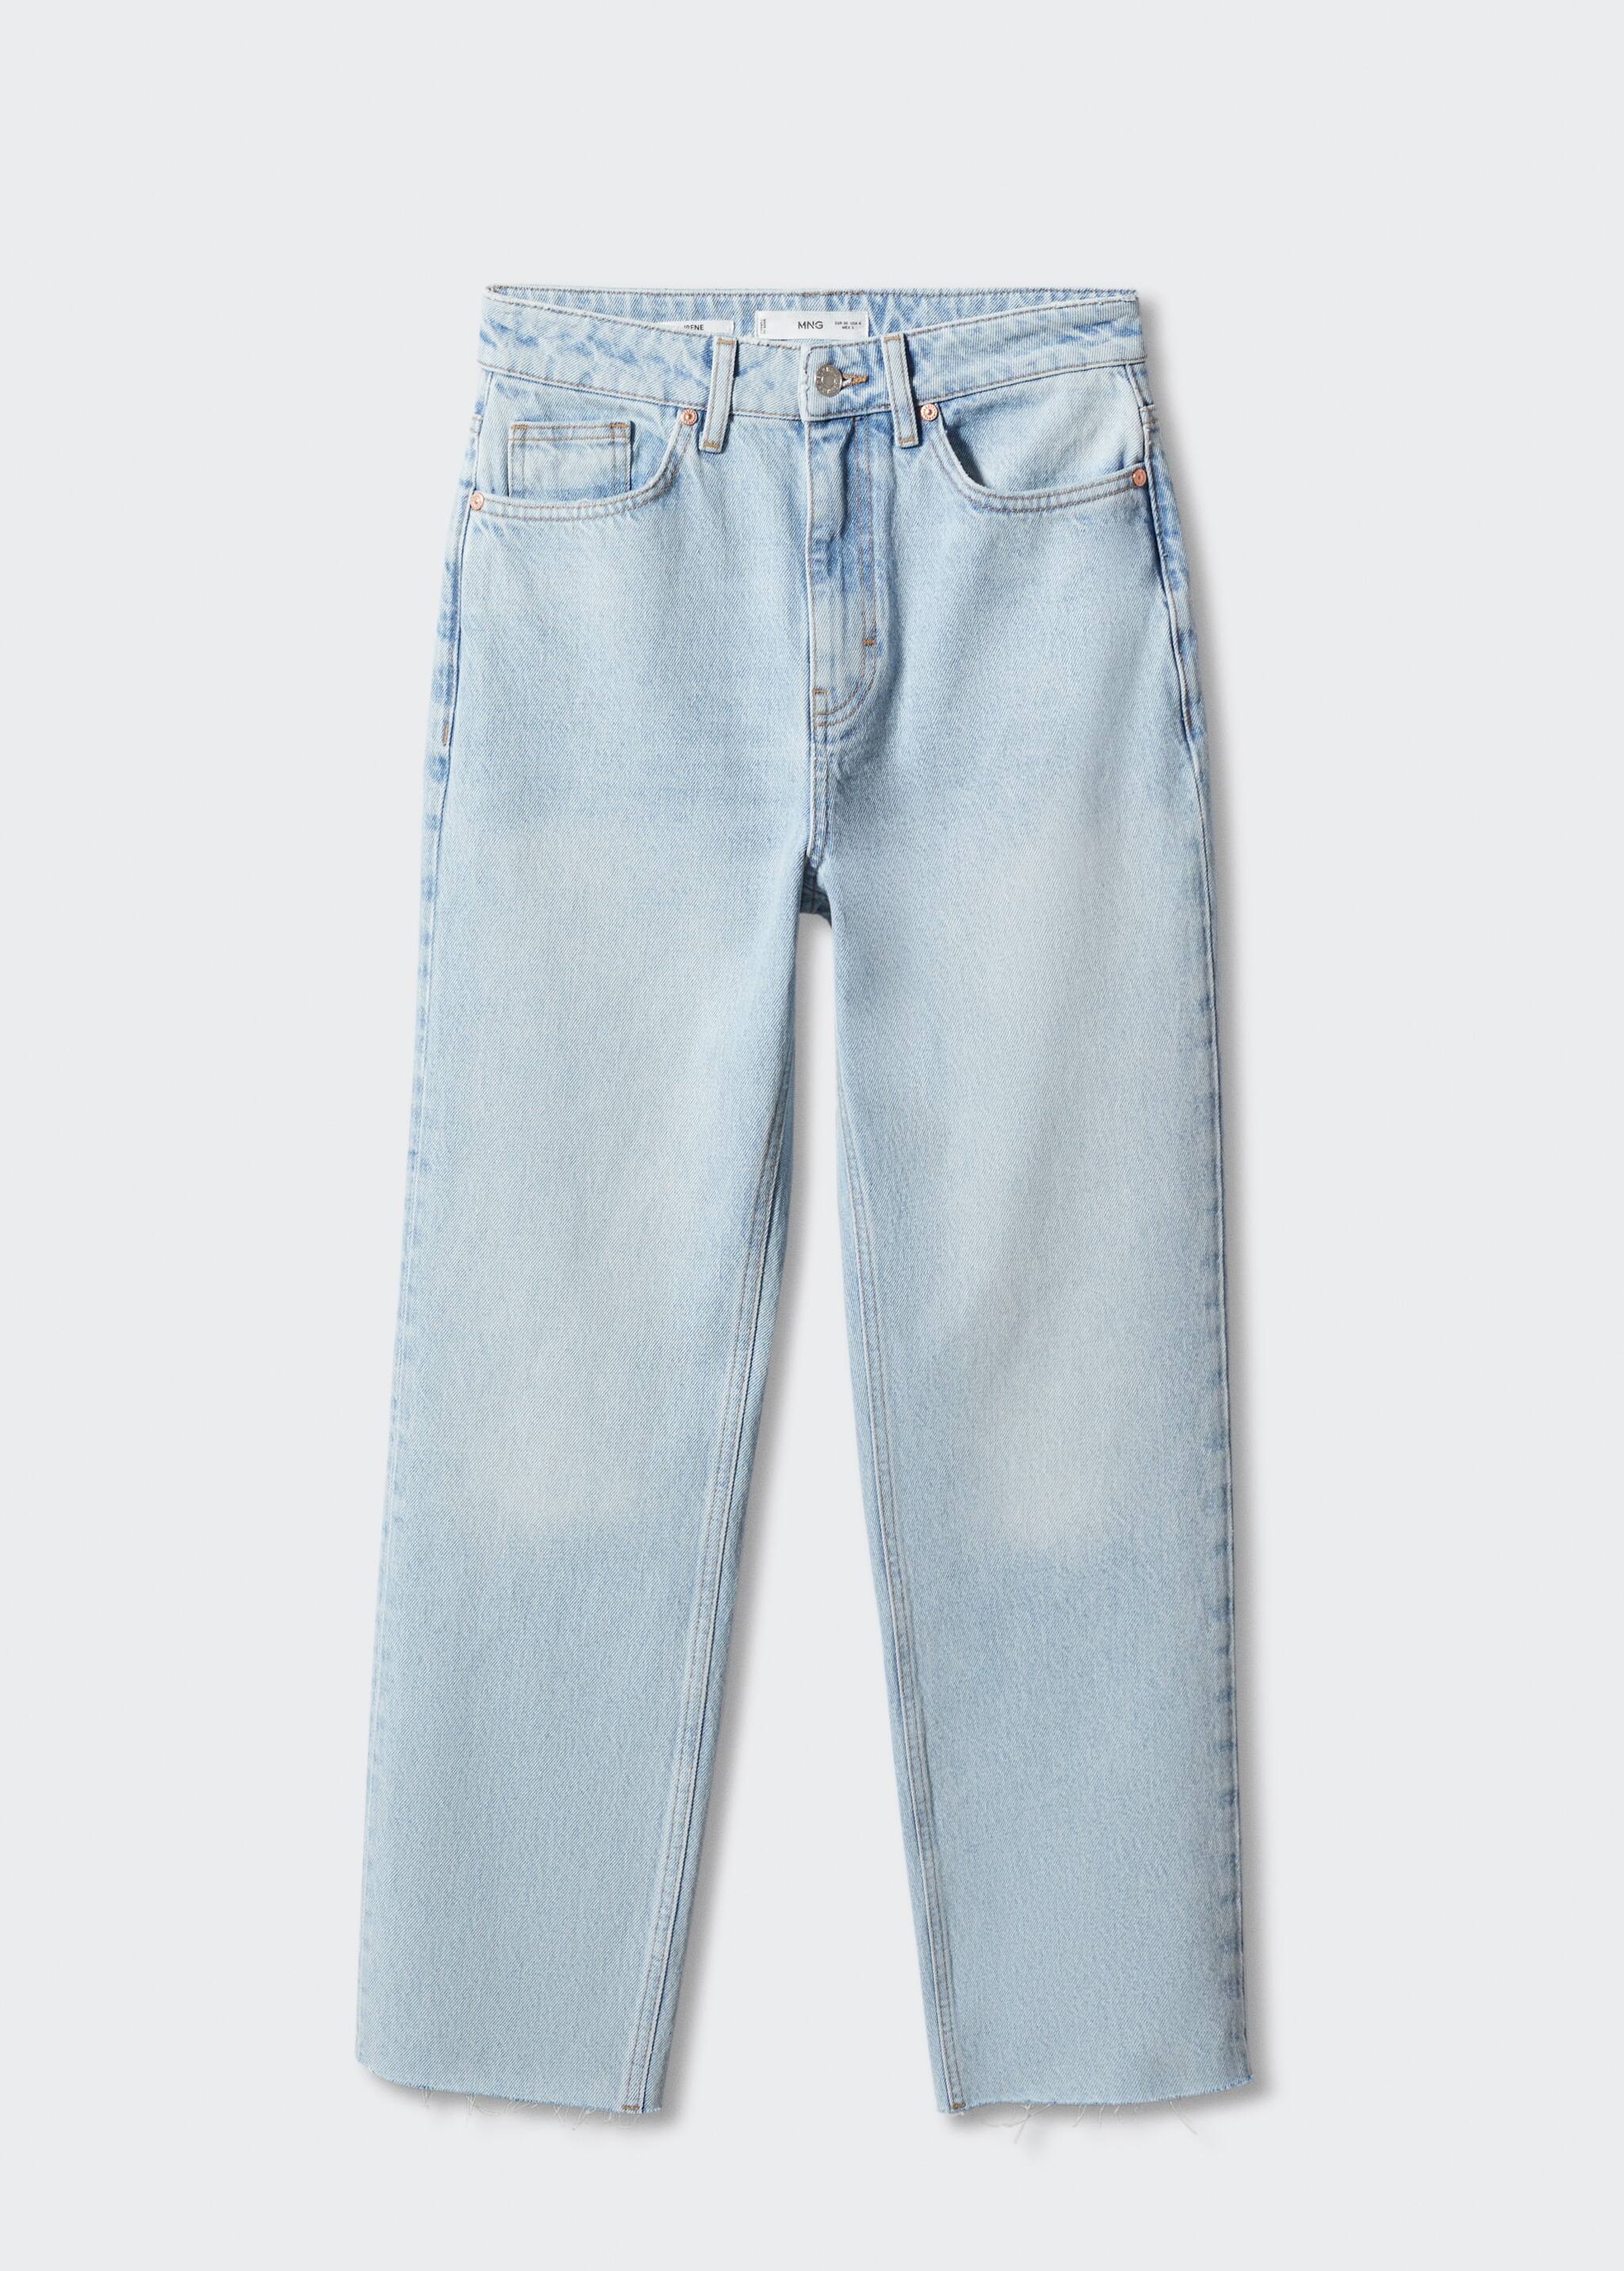 Jeans rectos tiro alto - Artículo sin modelo